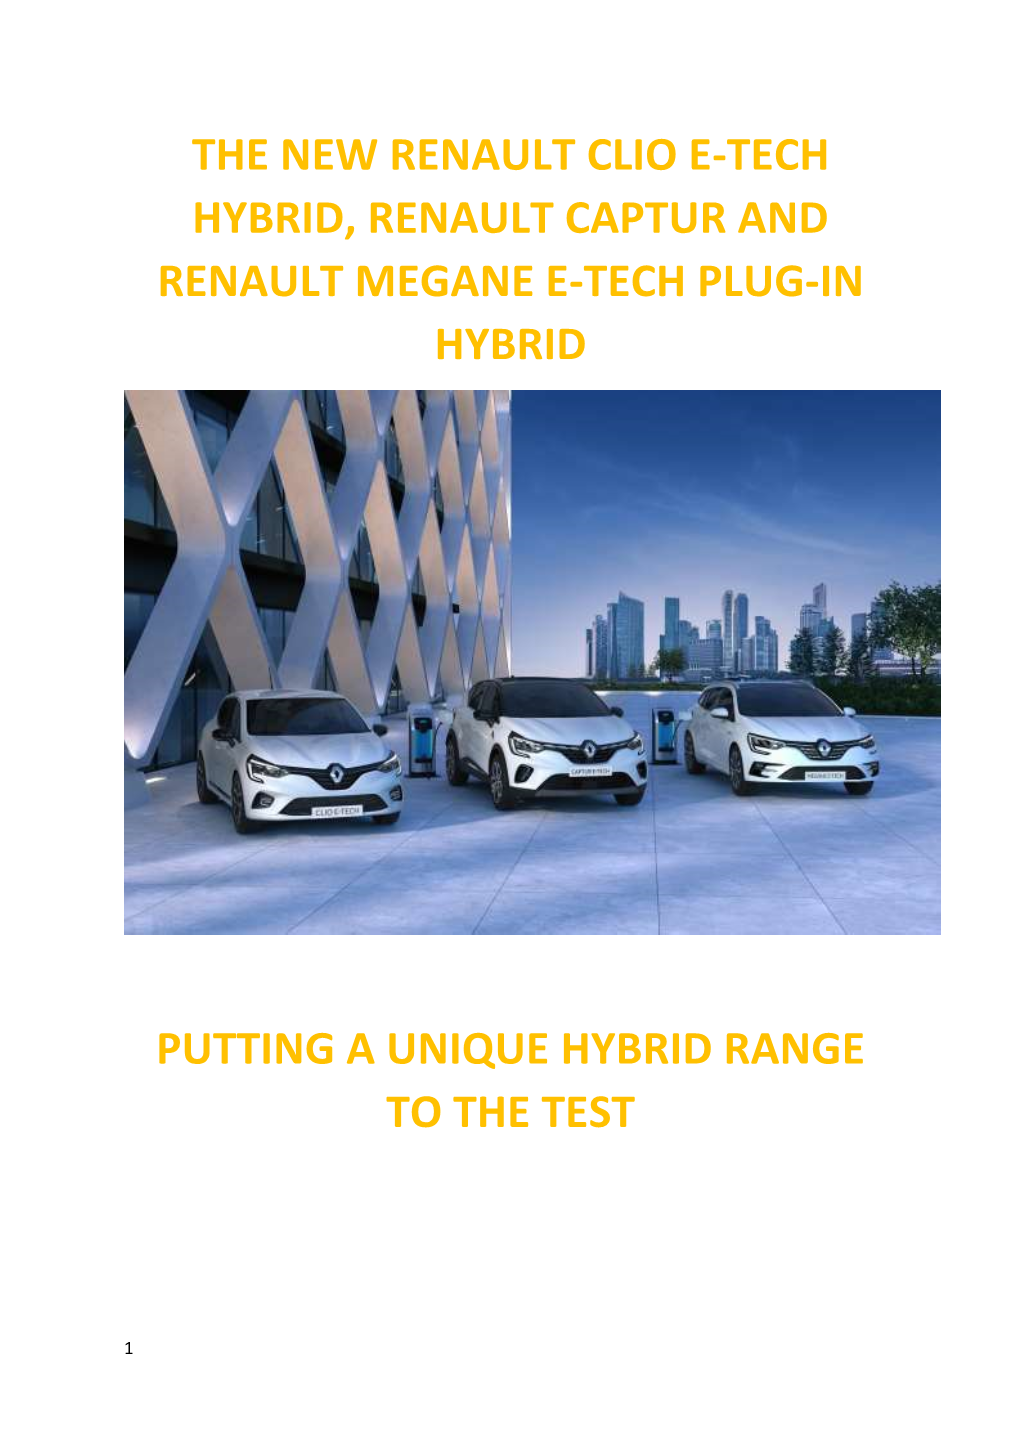 The New Renault Clio E-Tech Hybrid, Renault Captur and Renault Megane E-Tech Plug-In Hybrid